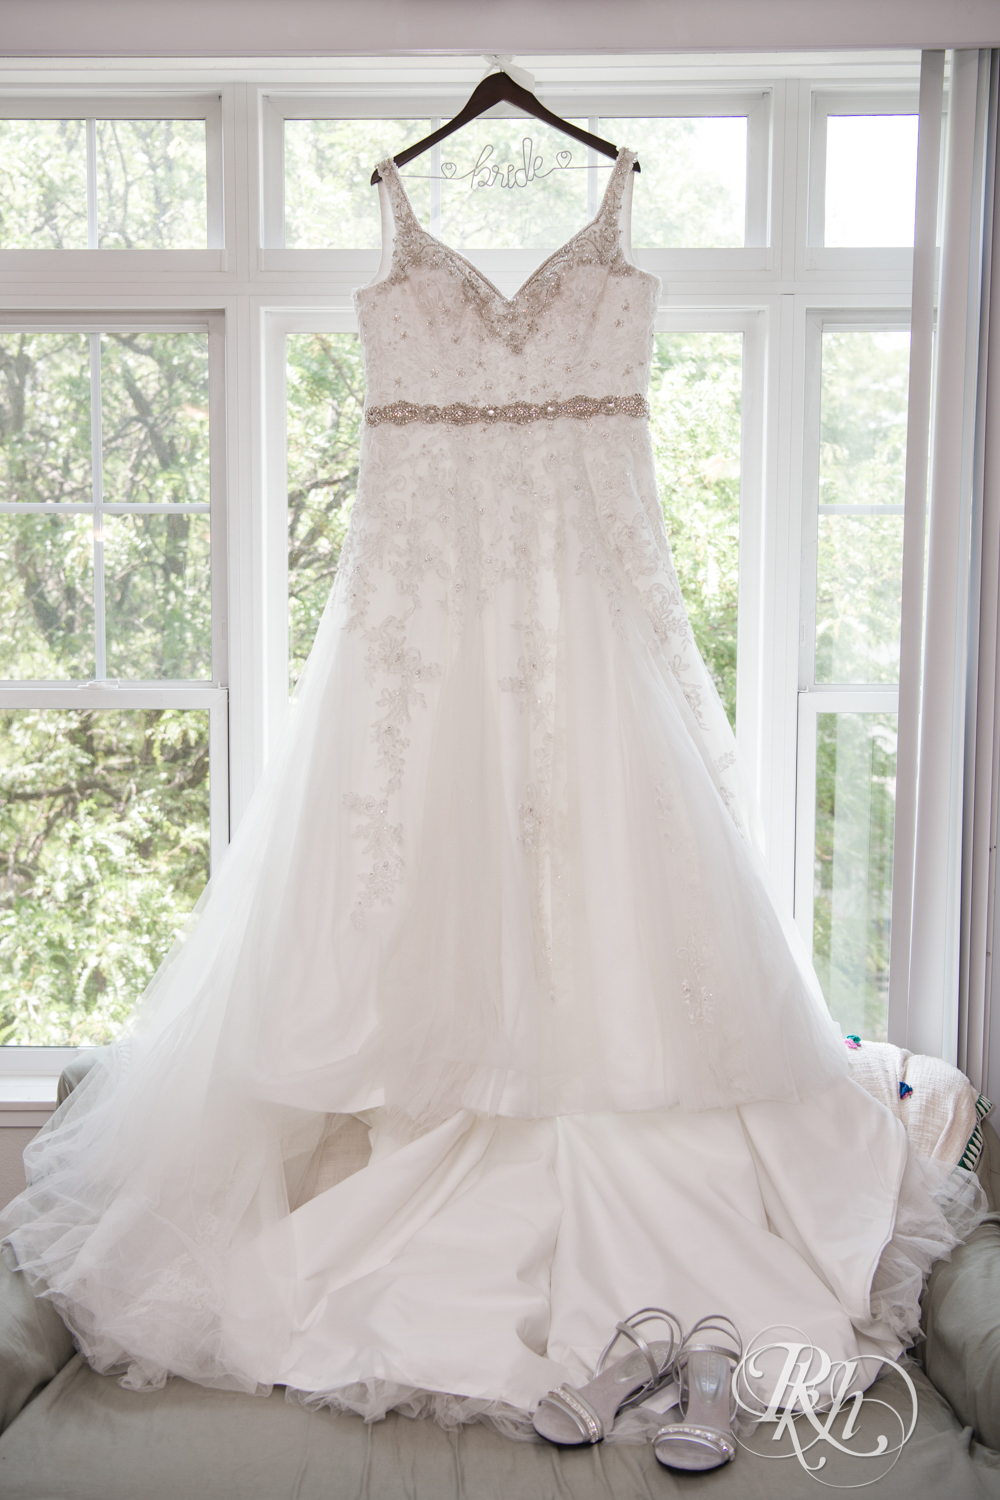 Wedding dress hanging in window.